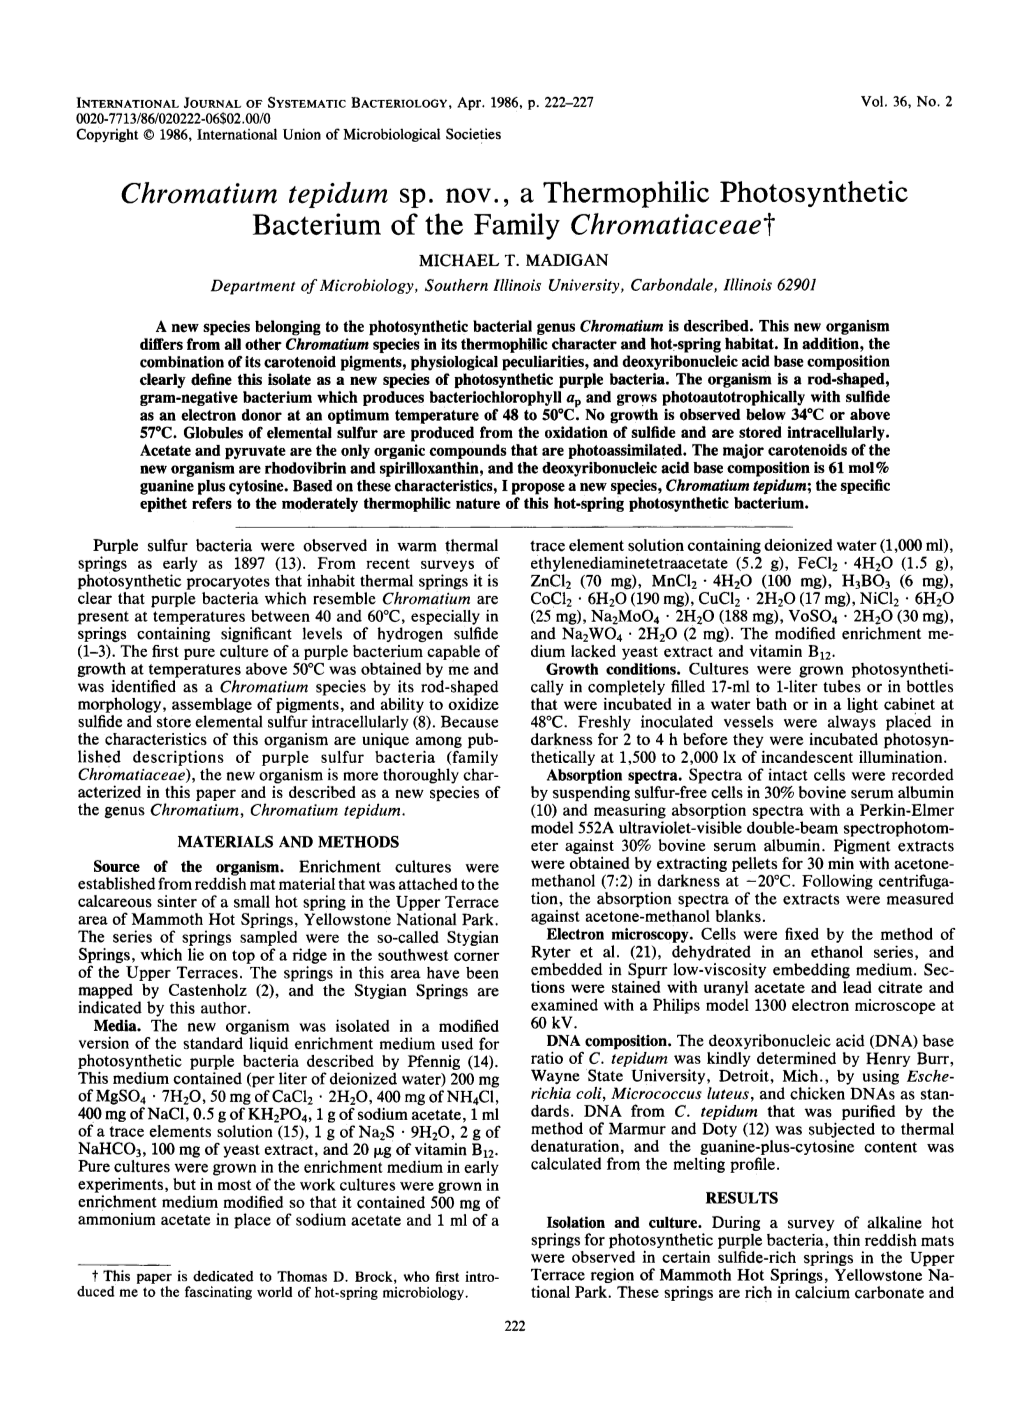 Chromatium Tepidum Sp. Nov. a Thermophilic Photosynthetic Bacterium of the Family Chromatiaceae? MICHAEL T